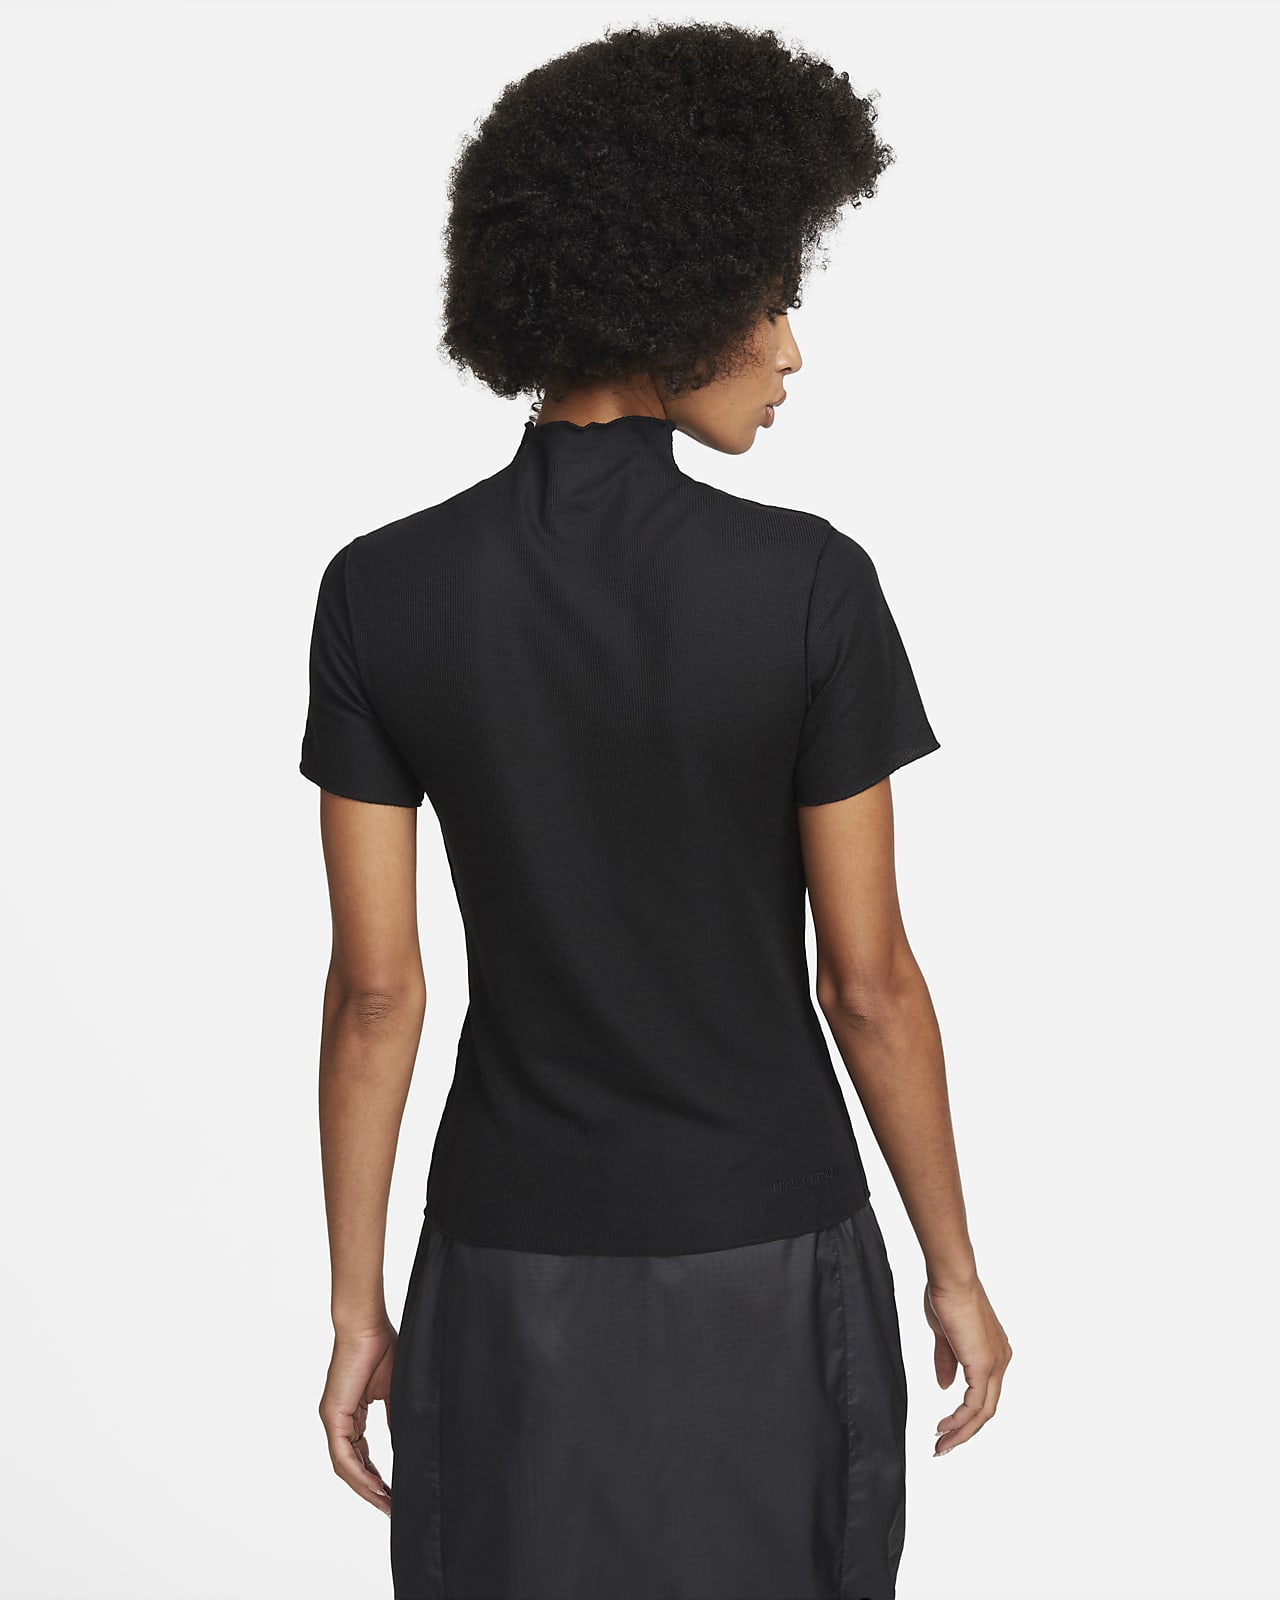 Nike Sportswear Dri-FIT ADV Tech Pack Women's Short-Sleeve Top. Nike SA